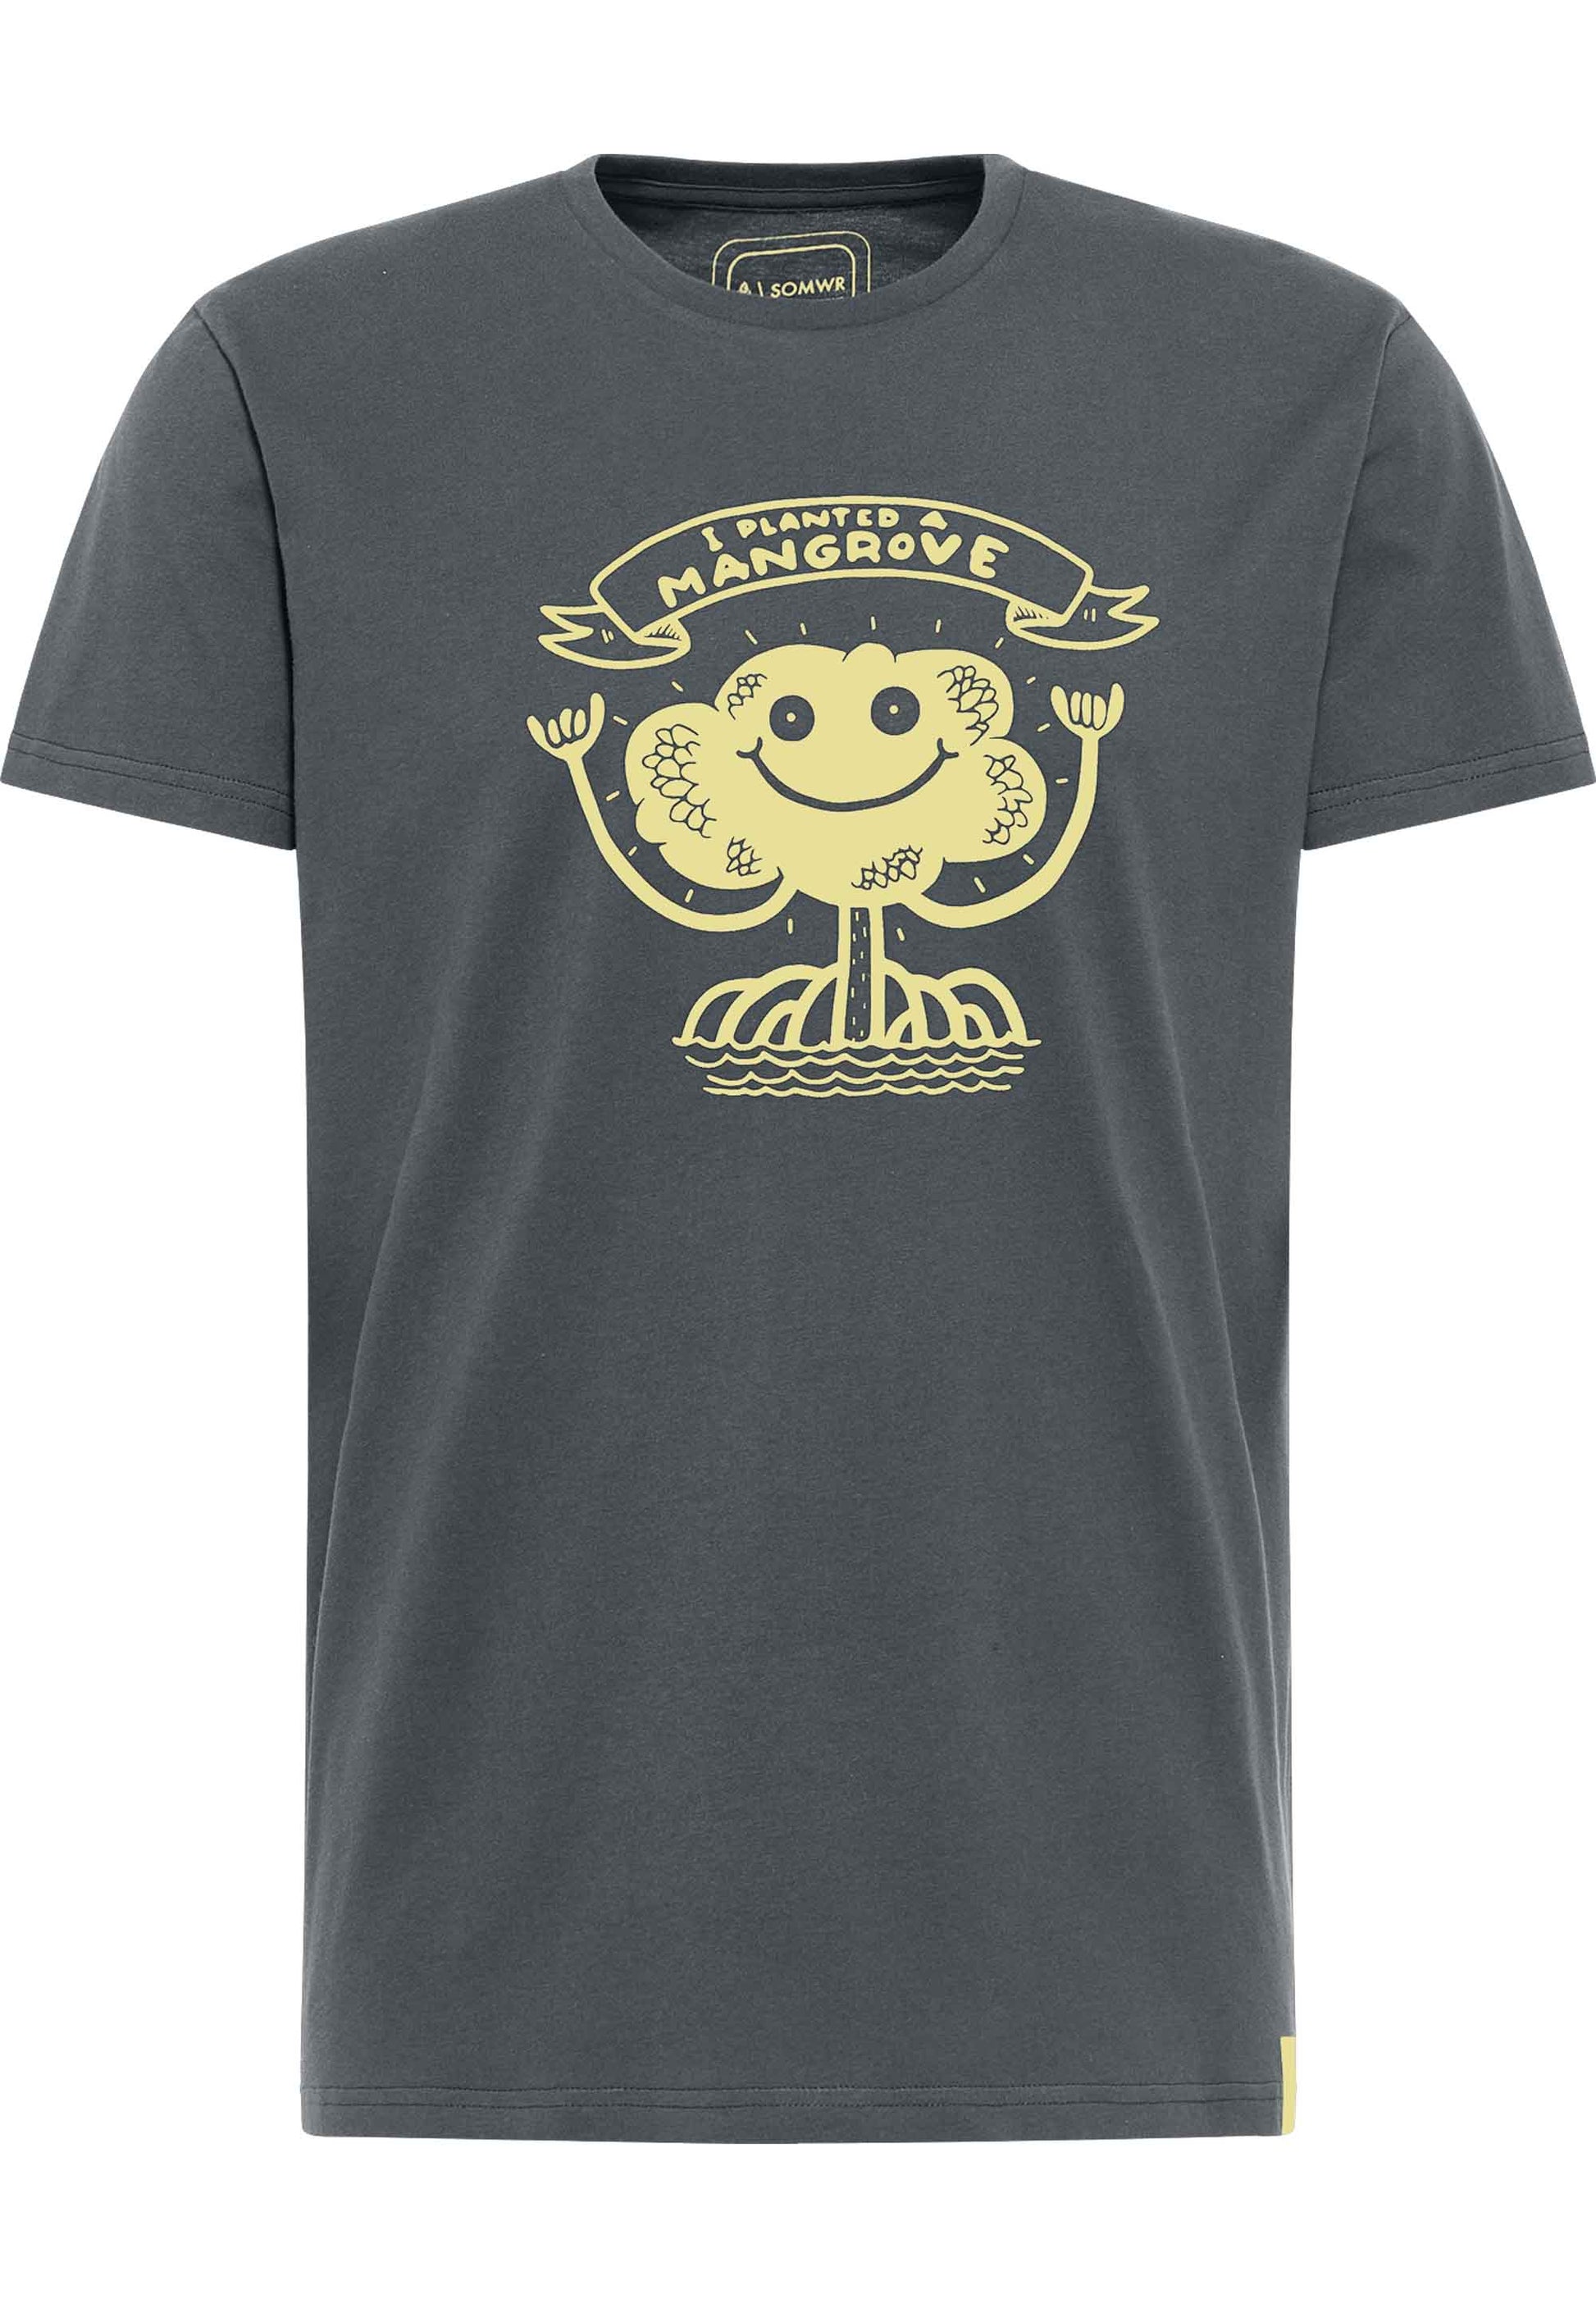 SOMWR MANGROVE TREE TEE T-Shirt GRY010